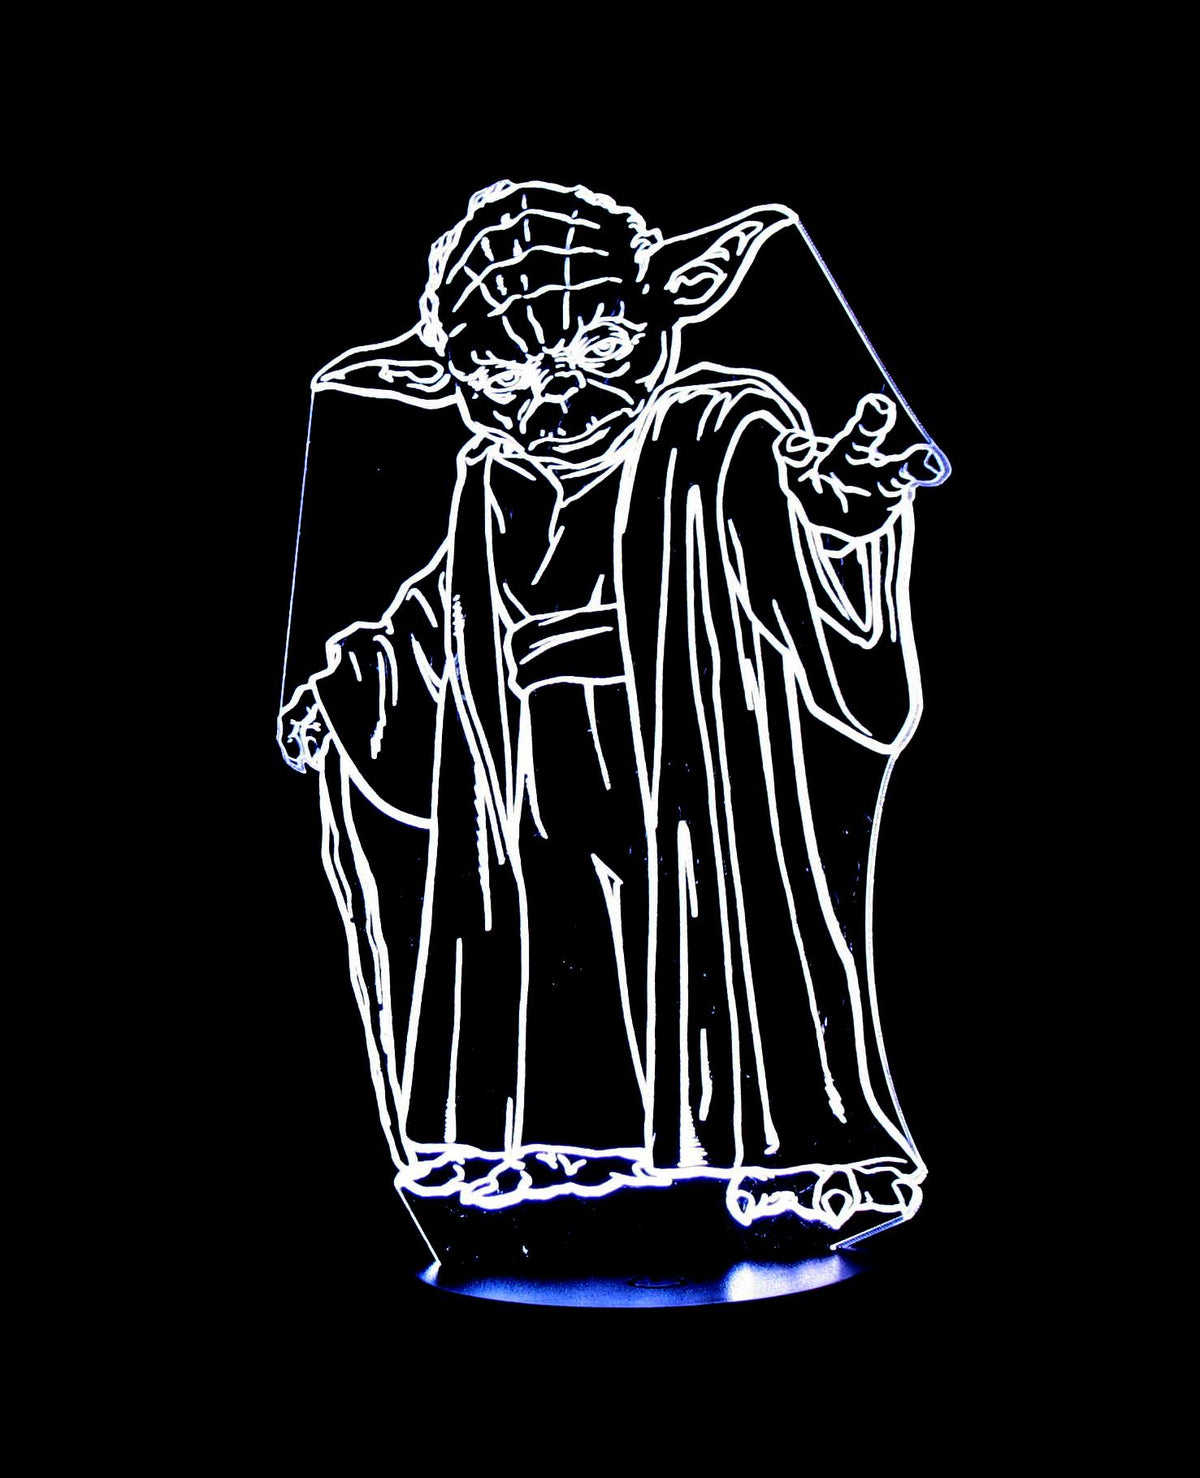 Yoda 3-D Optical Illusion Multicolored Light